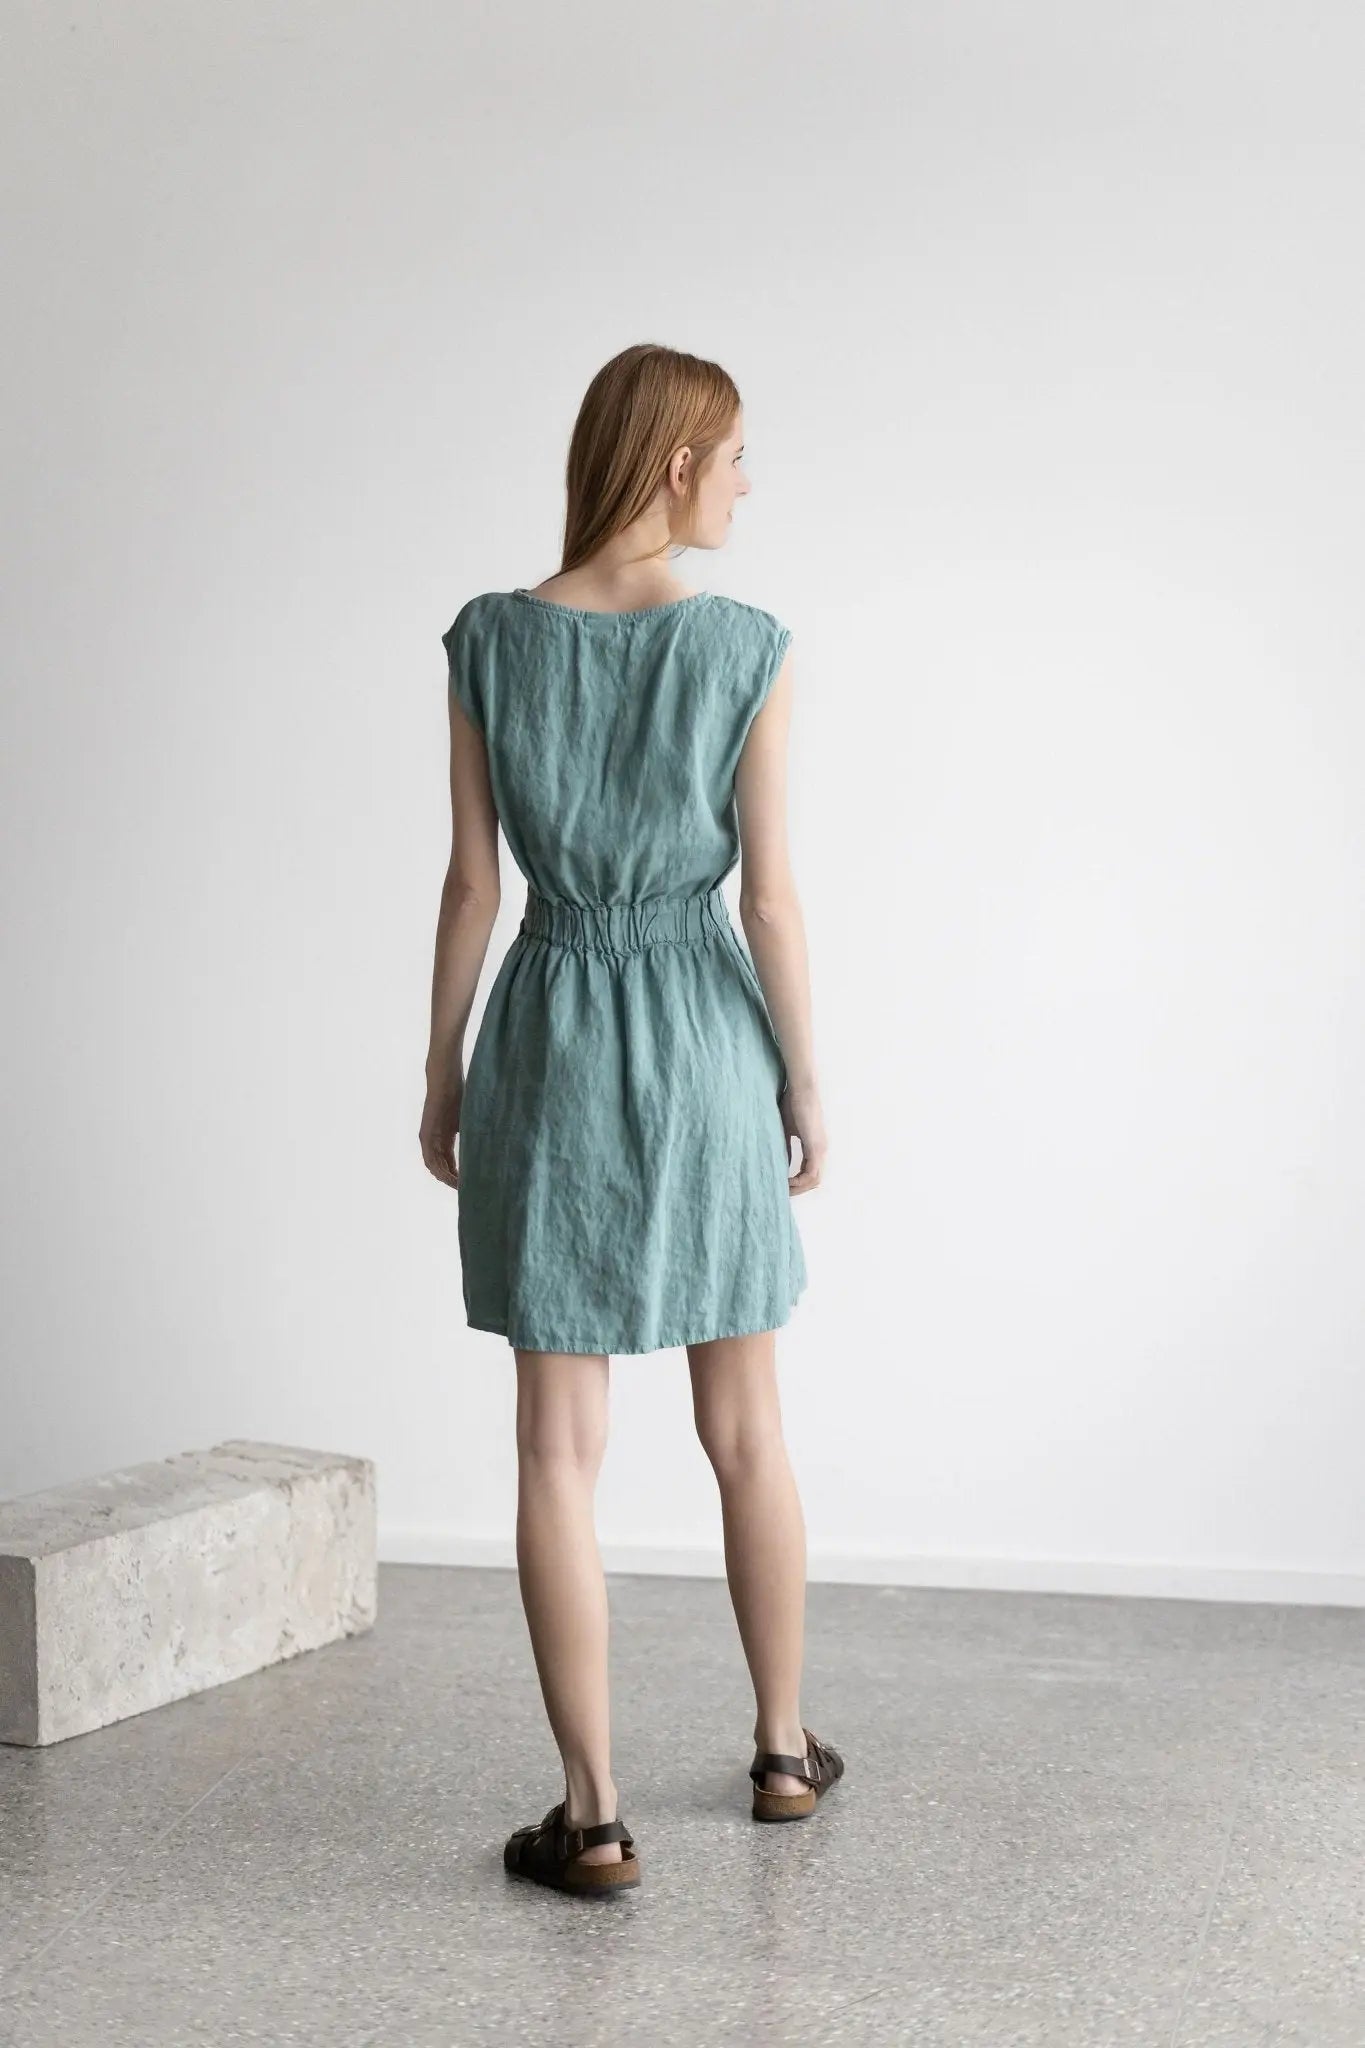 Linen Dress with Pockets - Epic Linen luxury linen